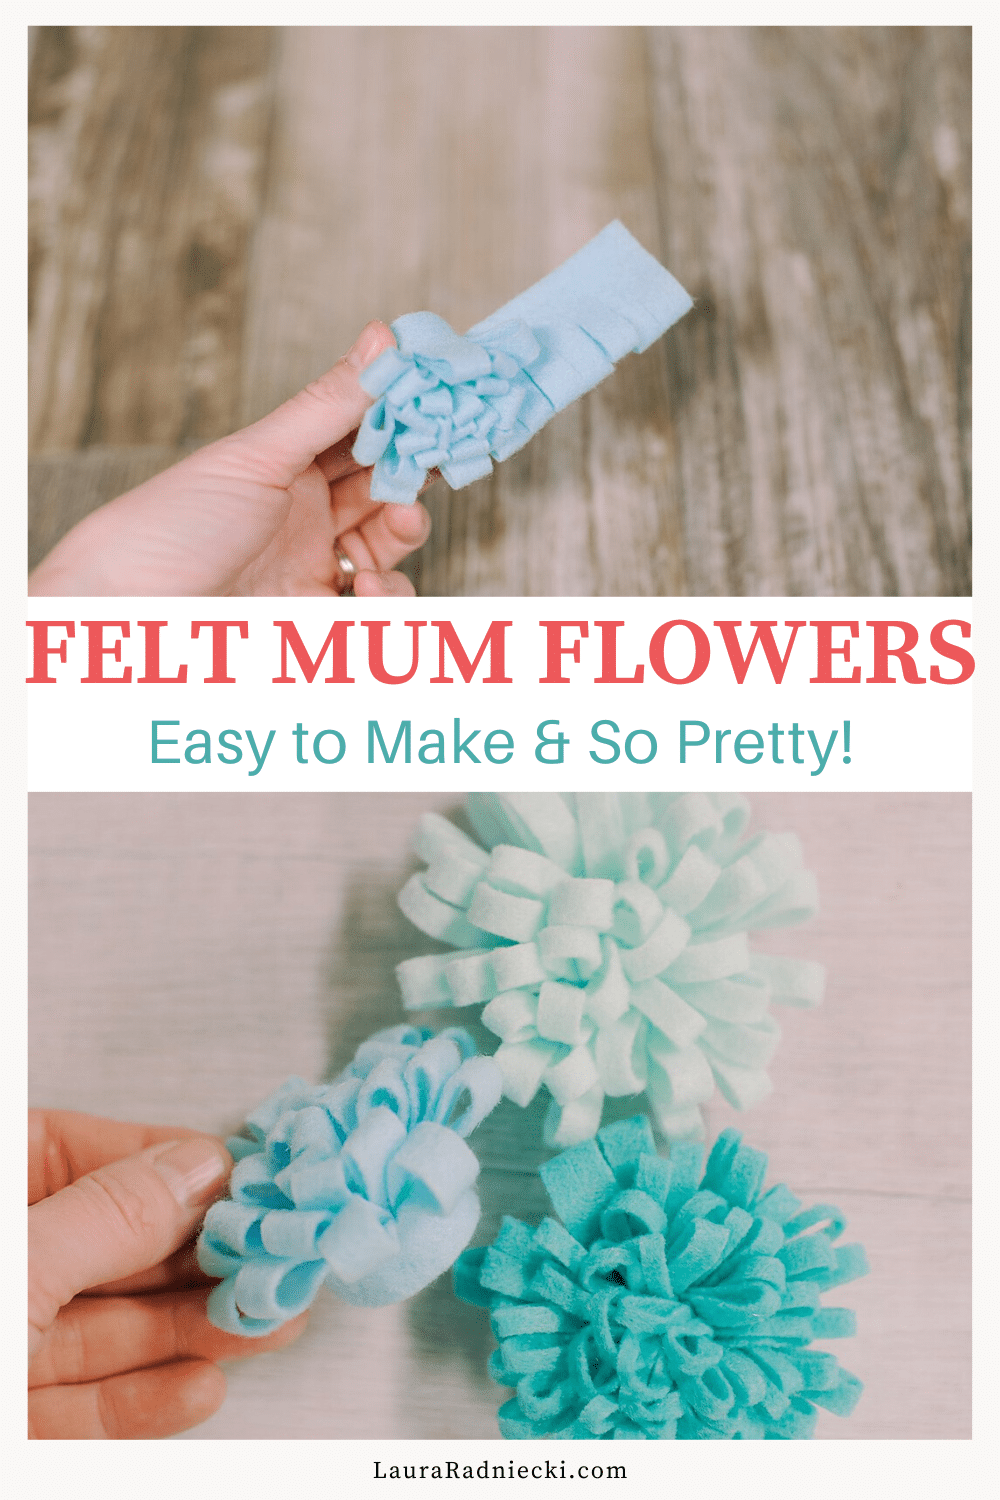 How to Make Felt Mum Flowers